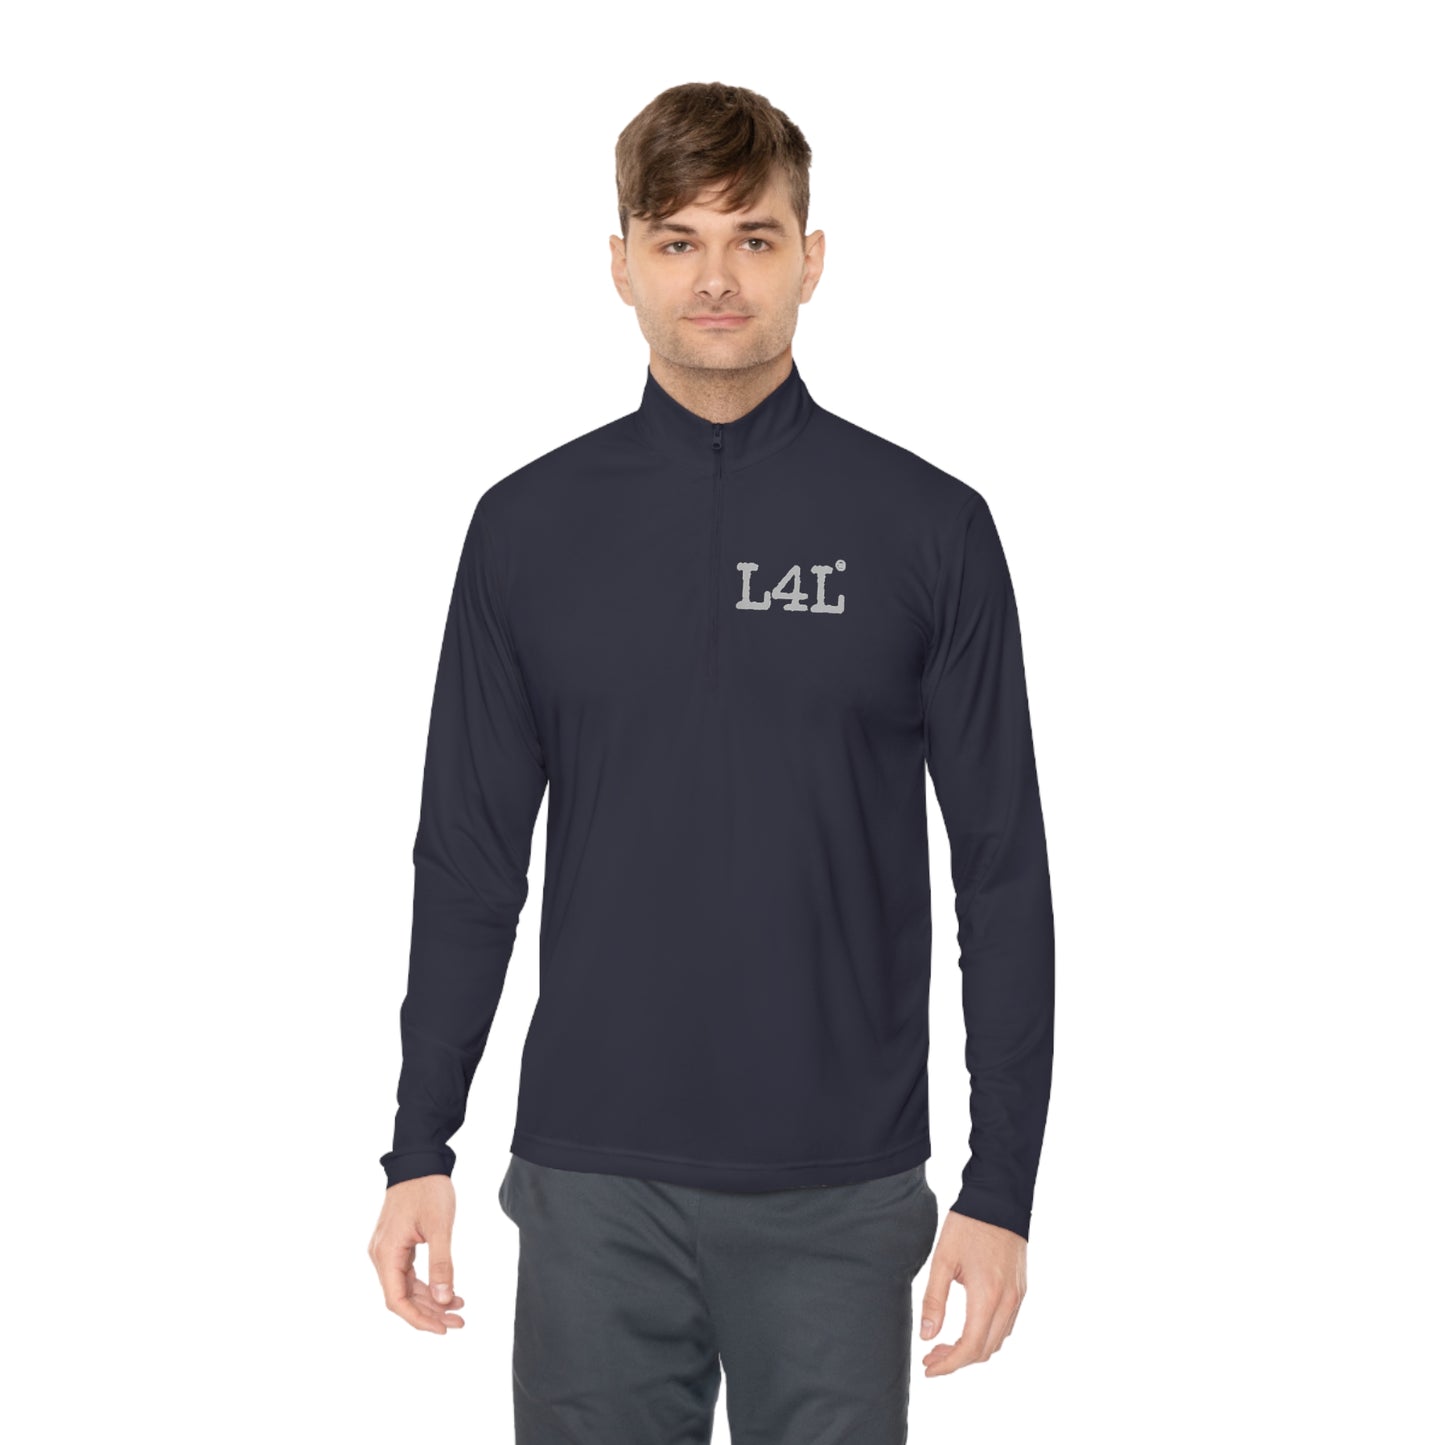 Gray print - Unisex Quarter-Zip Pullover